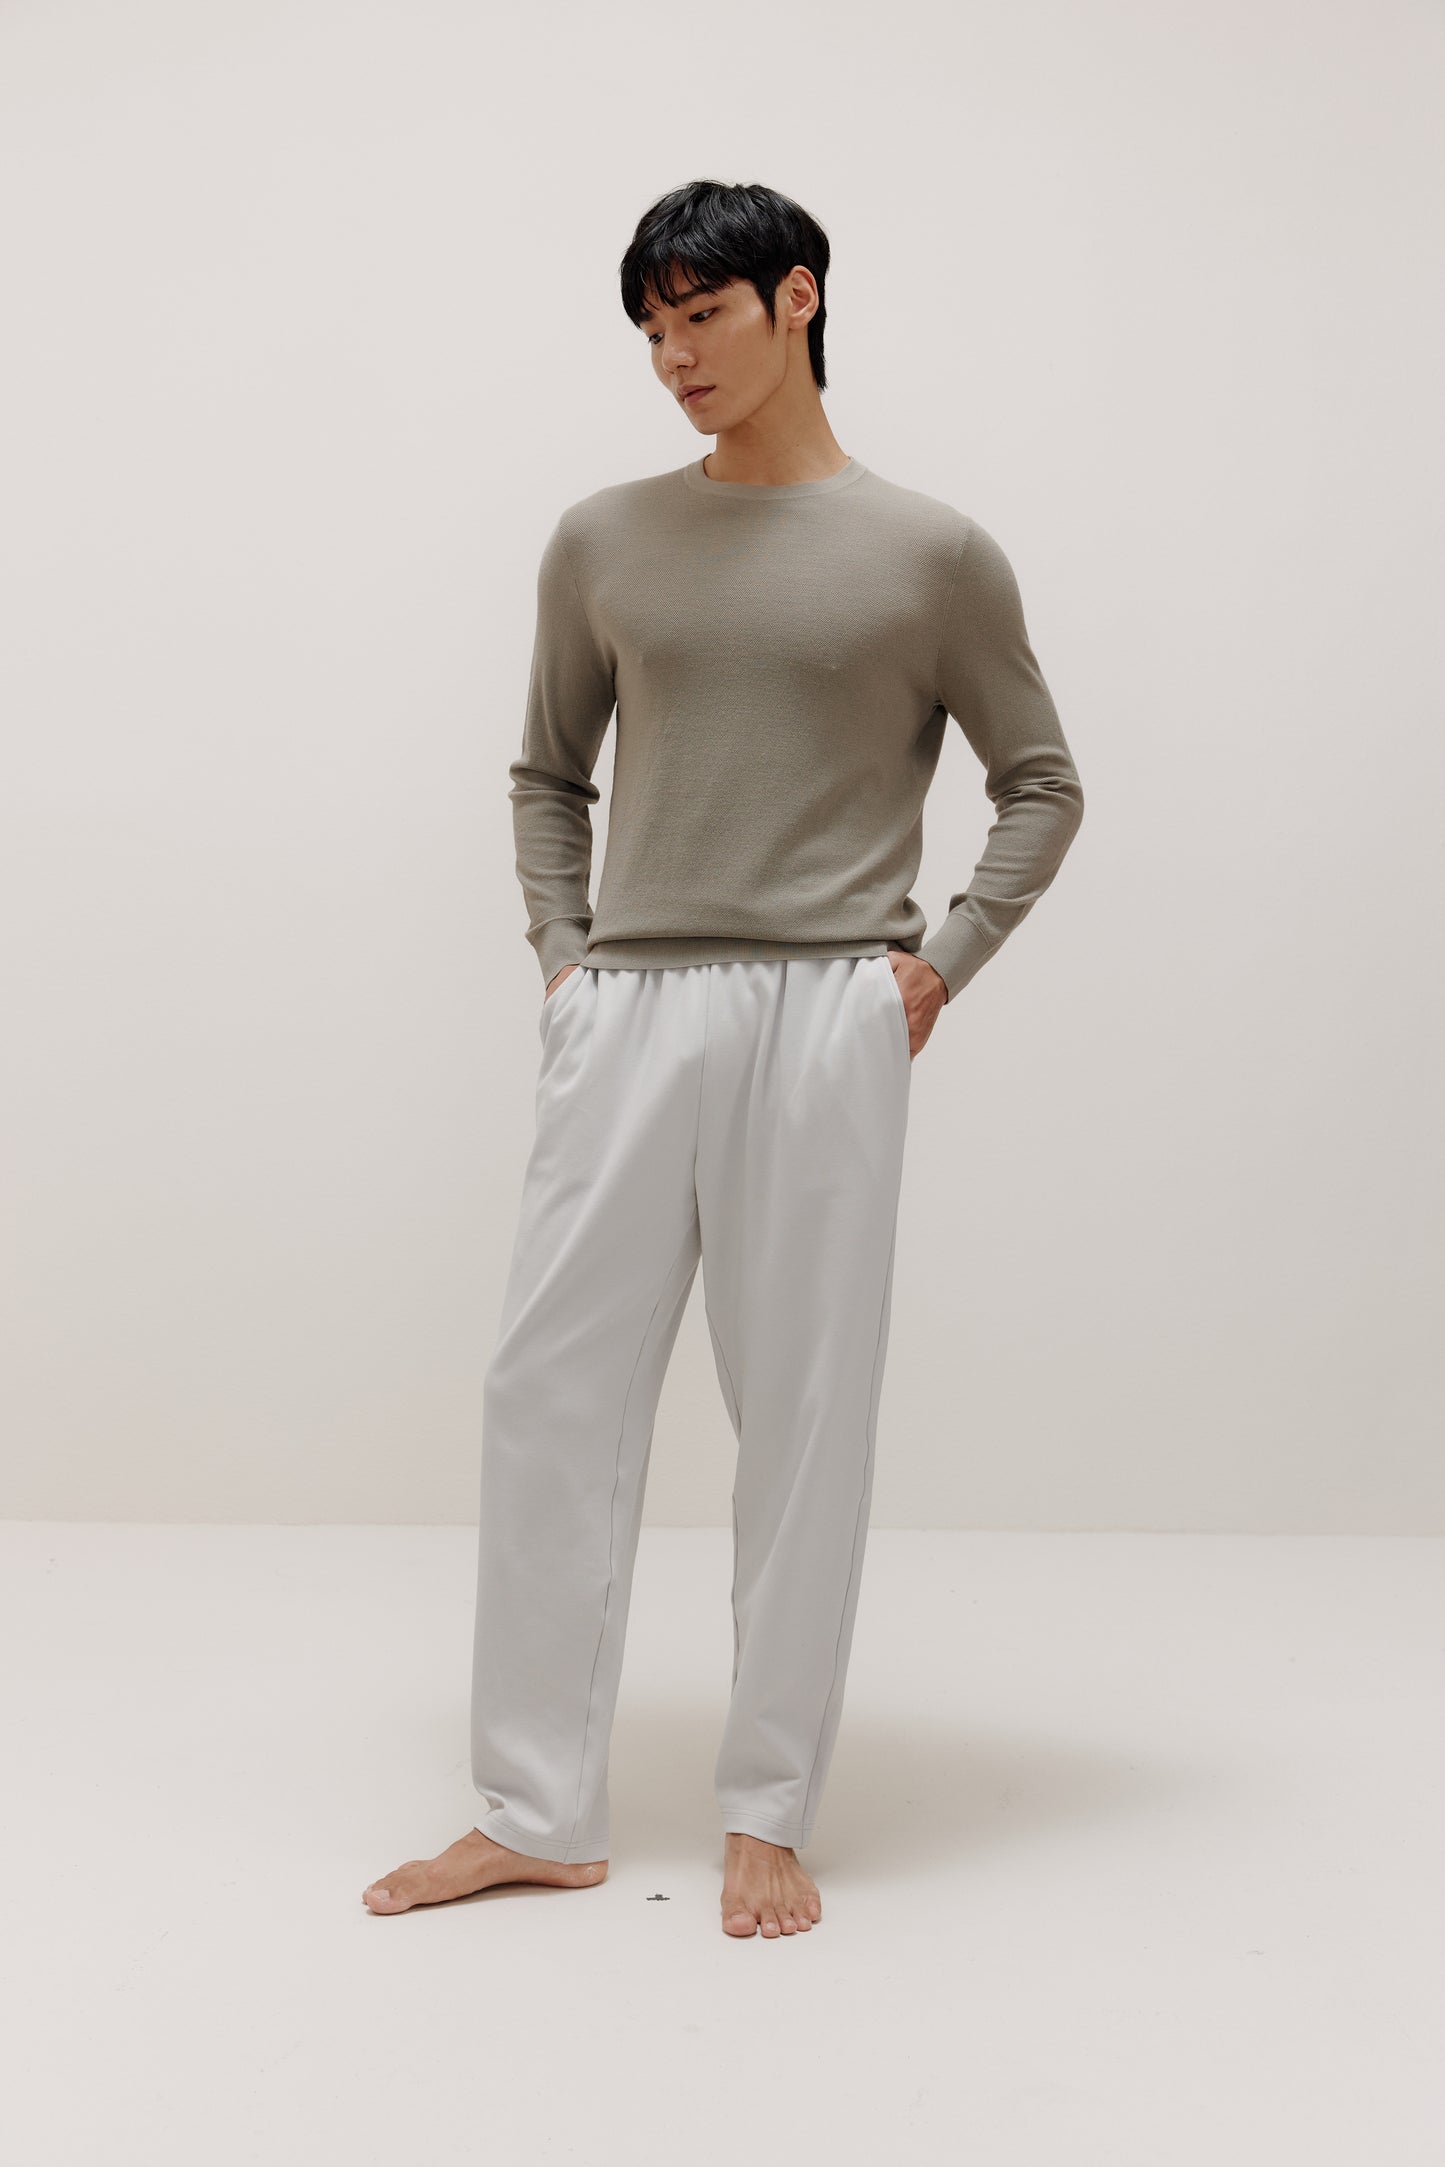 man in khaki sweater and grey pants